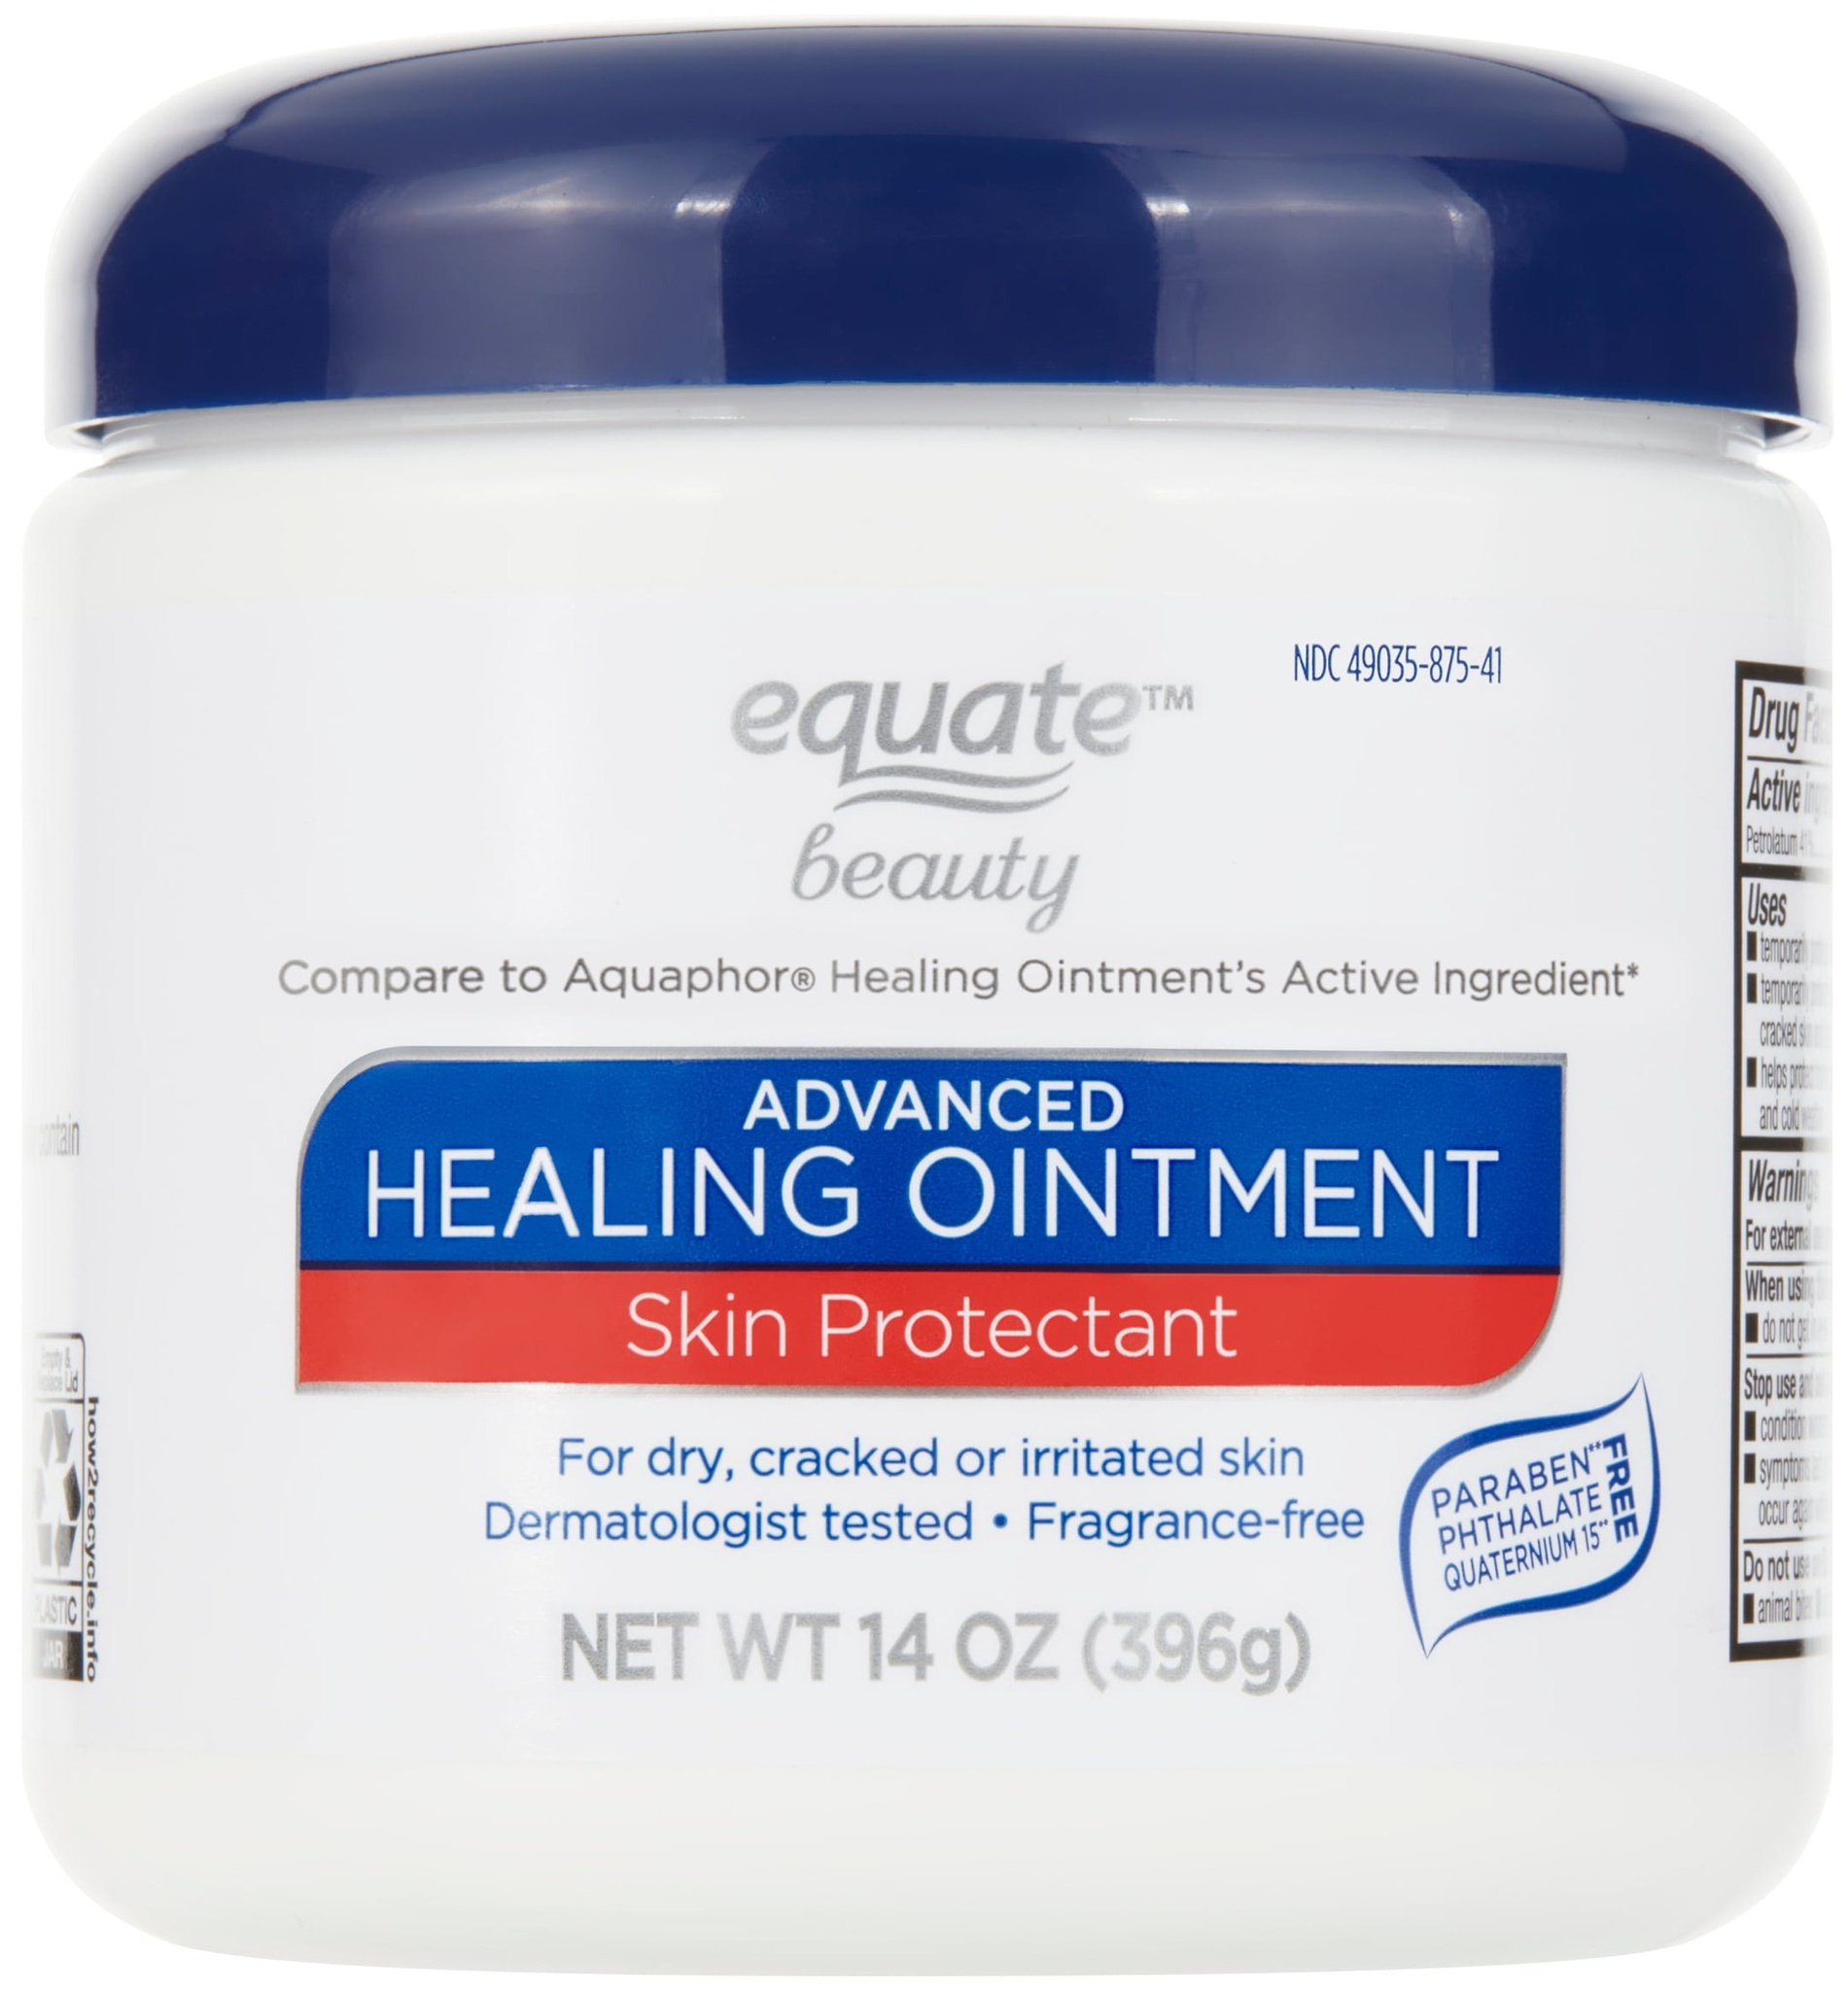 Equate Beauty Advanced Healing Ointment